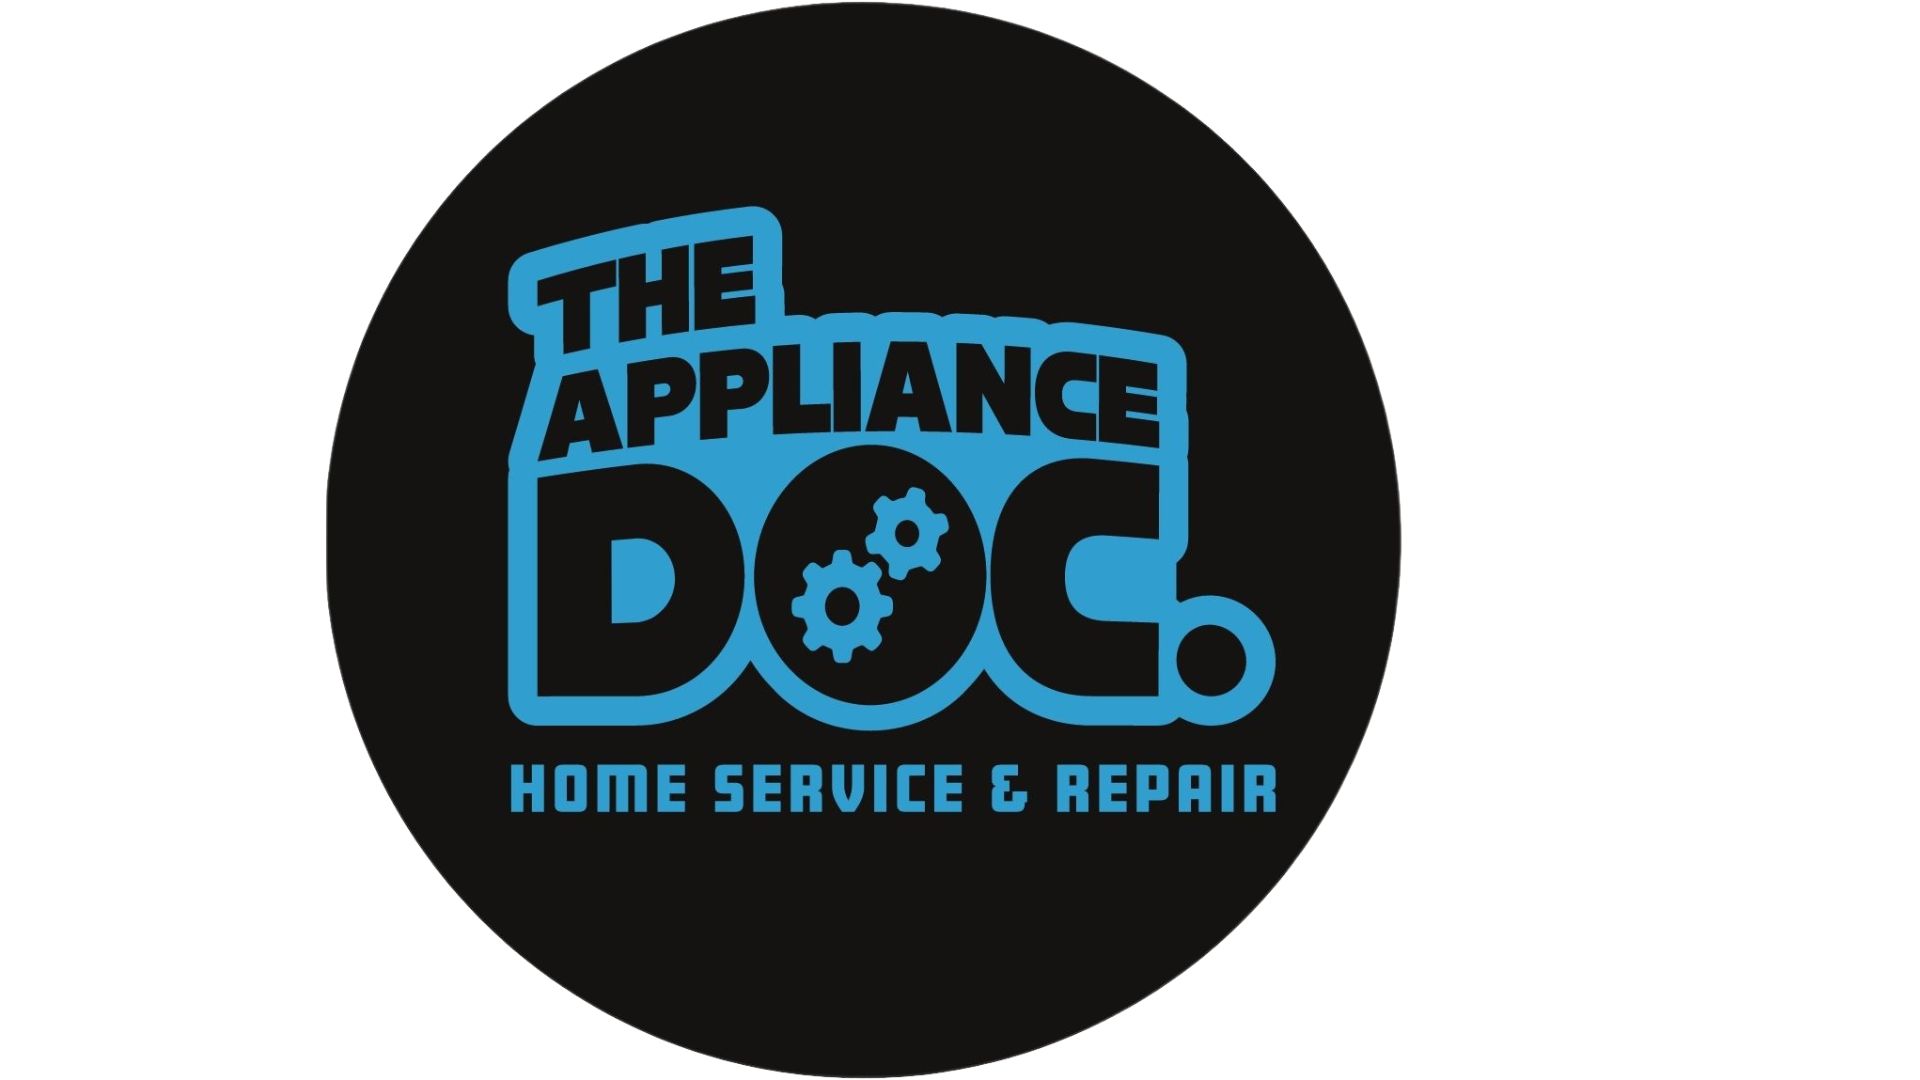 The Appliance Doc. - Denis & Amy Kilimnik